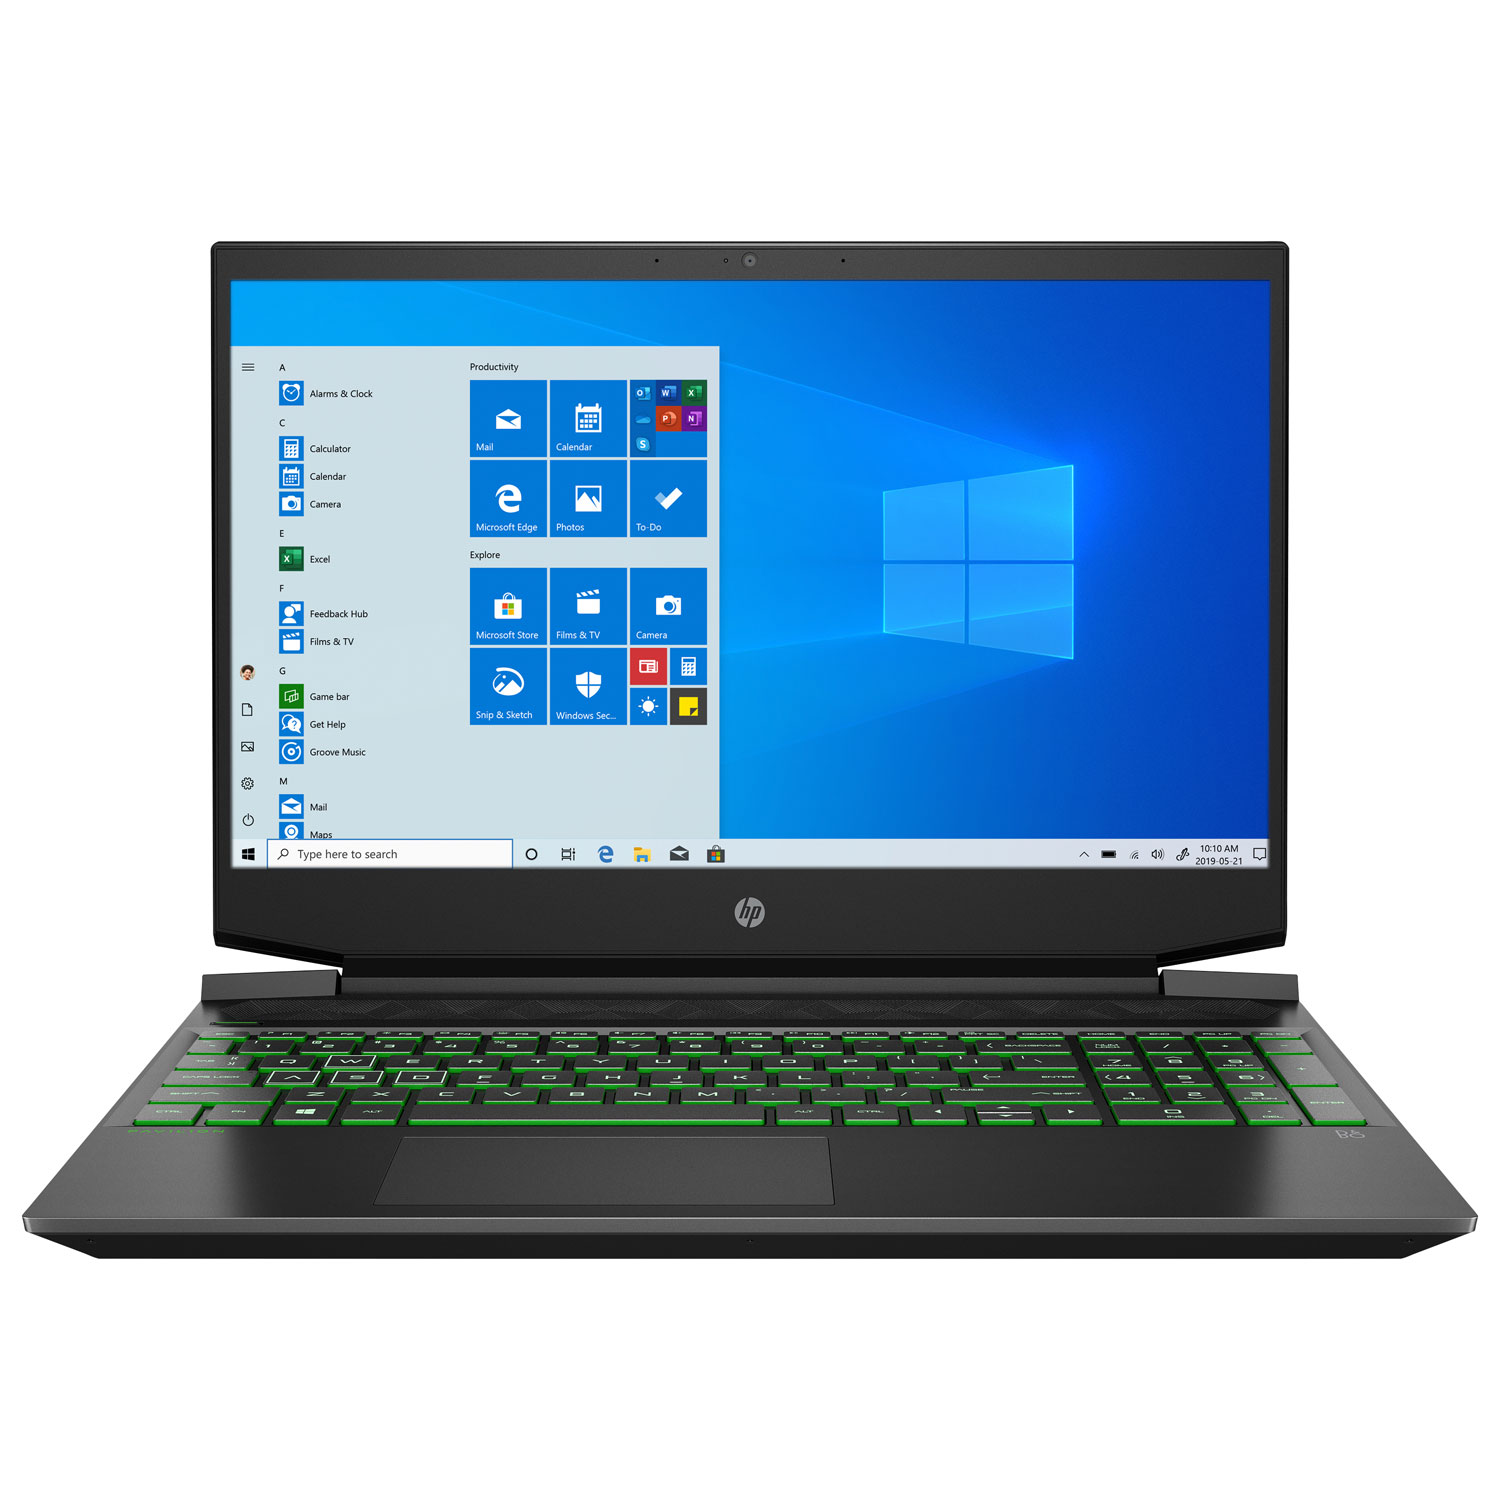 HP Pavilion 15.6" Gaming Laptop - Shadow Black (AMD Ryzen 5 5600H/512GB SSD/8GB RAM/GTX 1650)